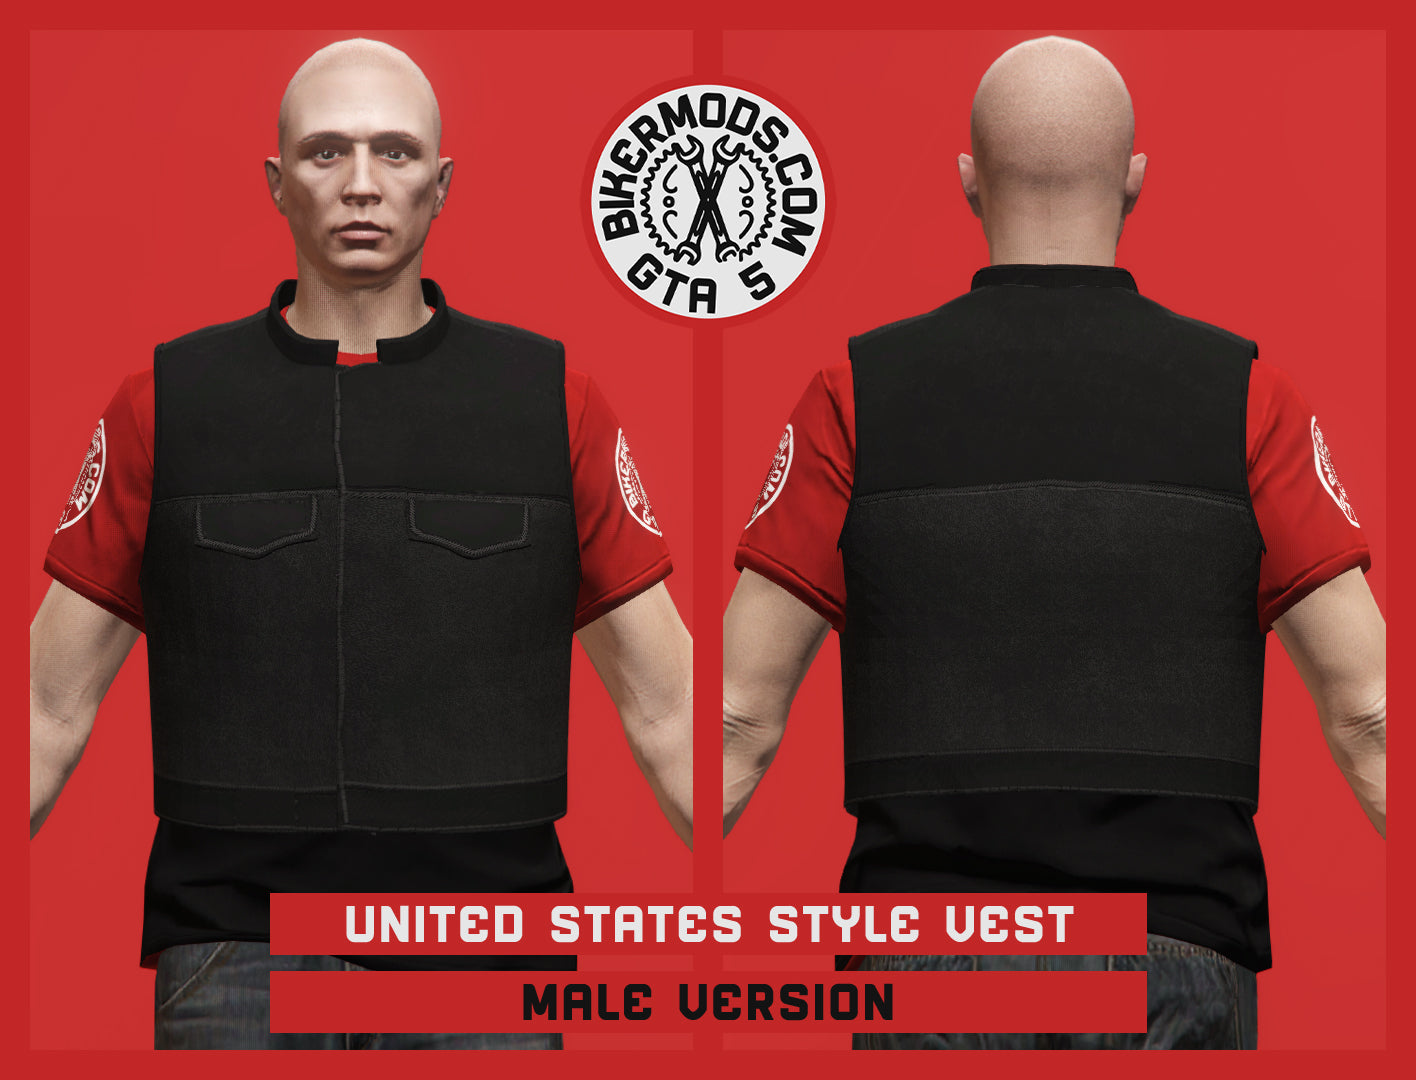 United States Style Biker Vest (Male)